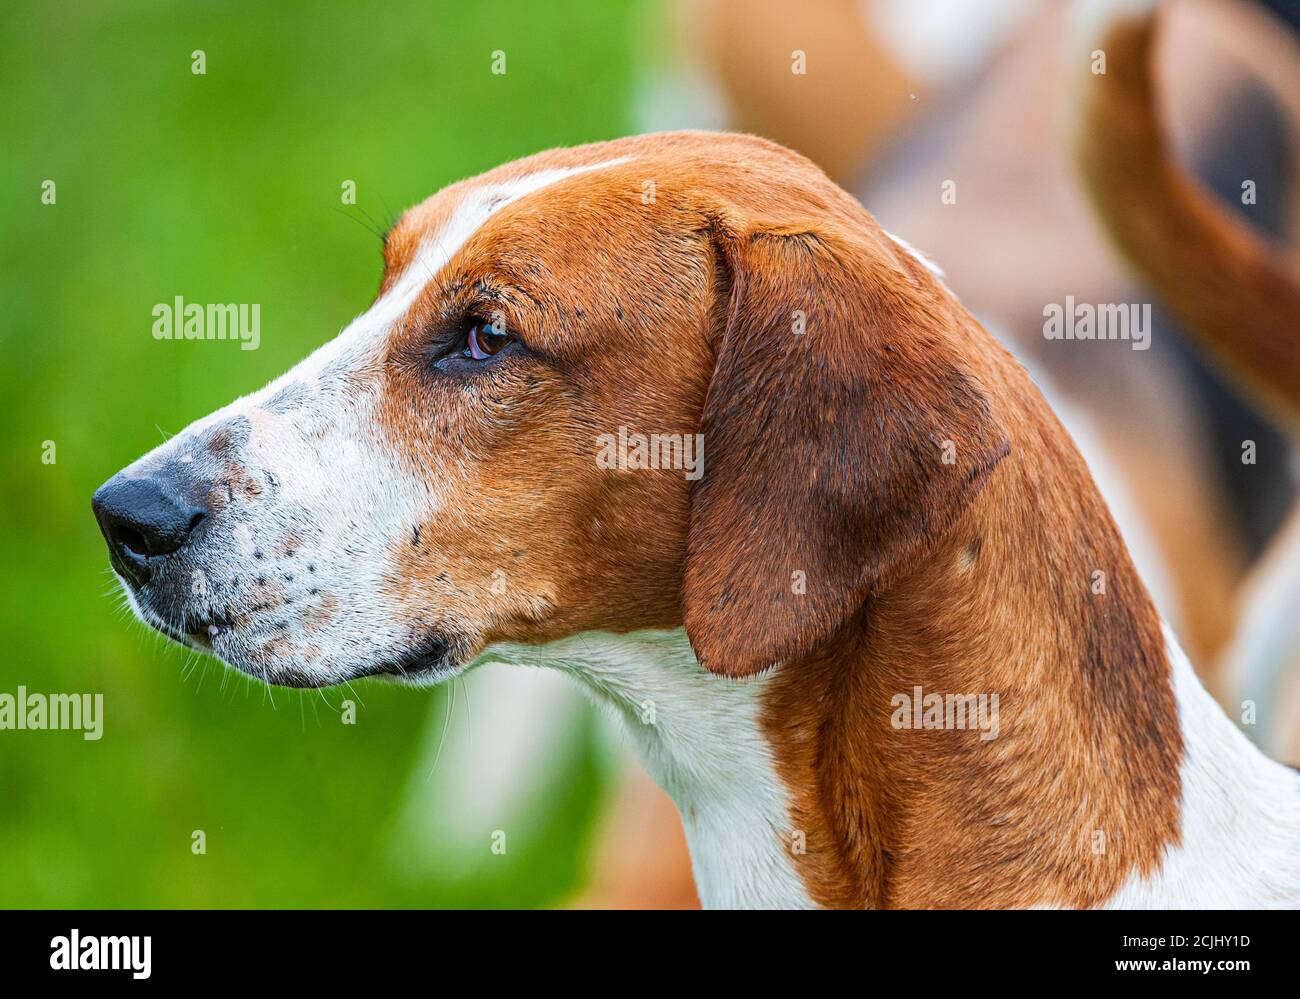 Belvoir, Grantham, Lincolnshire, UK - The Belvoir Hunt's Foxhounds Stock Photo